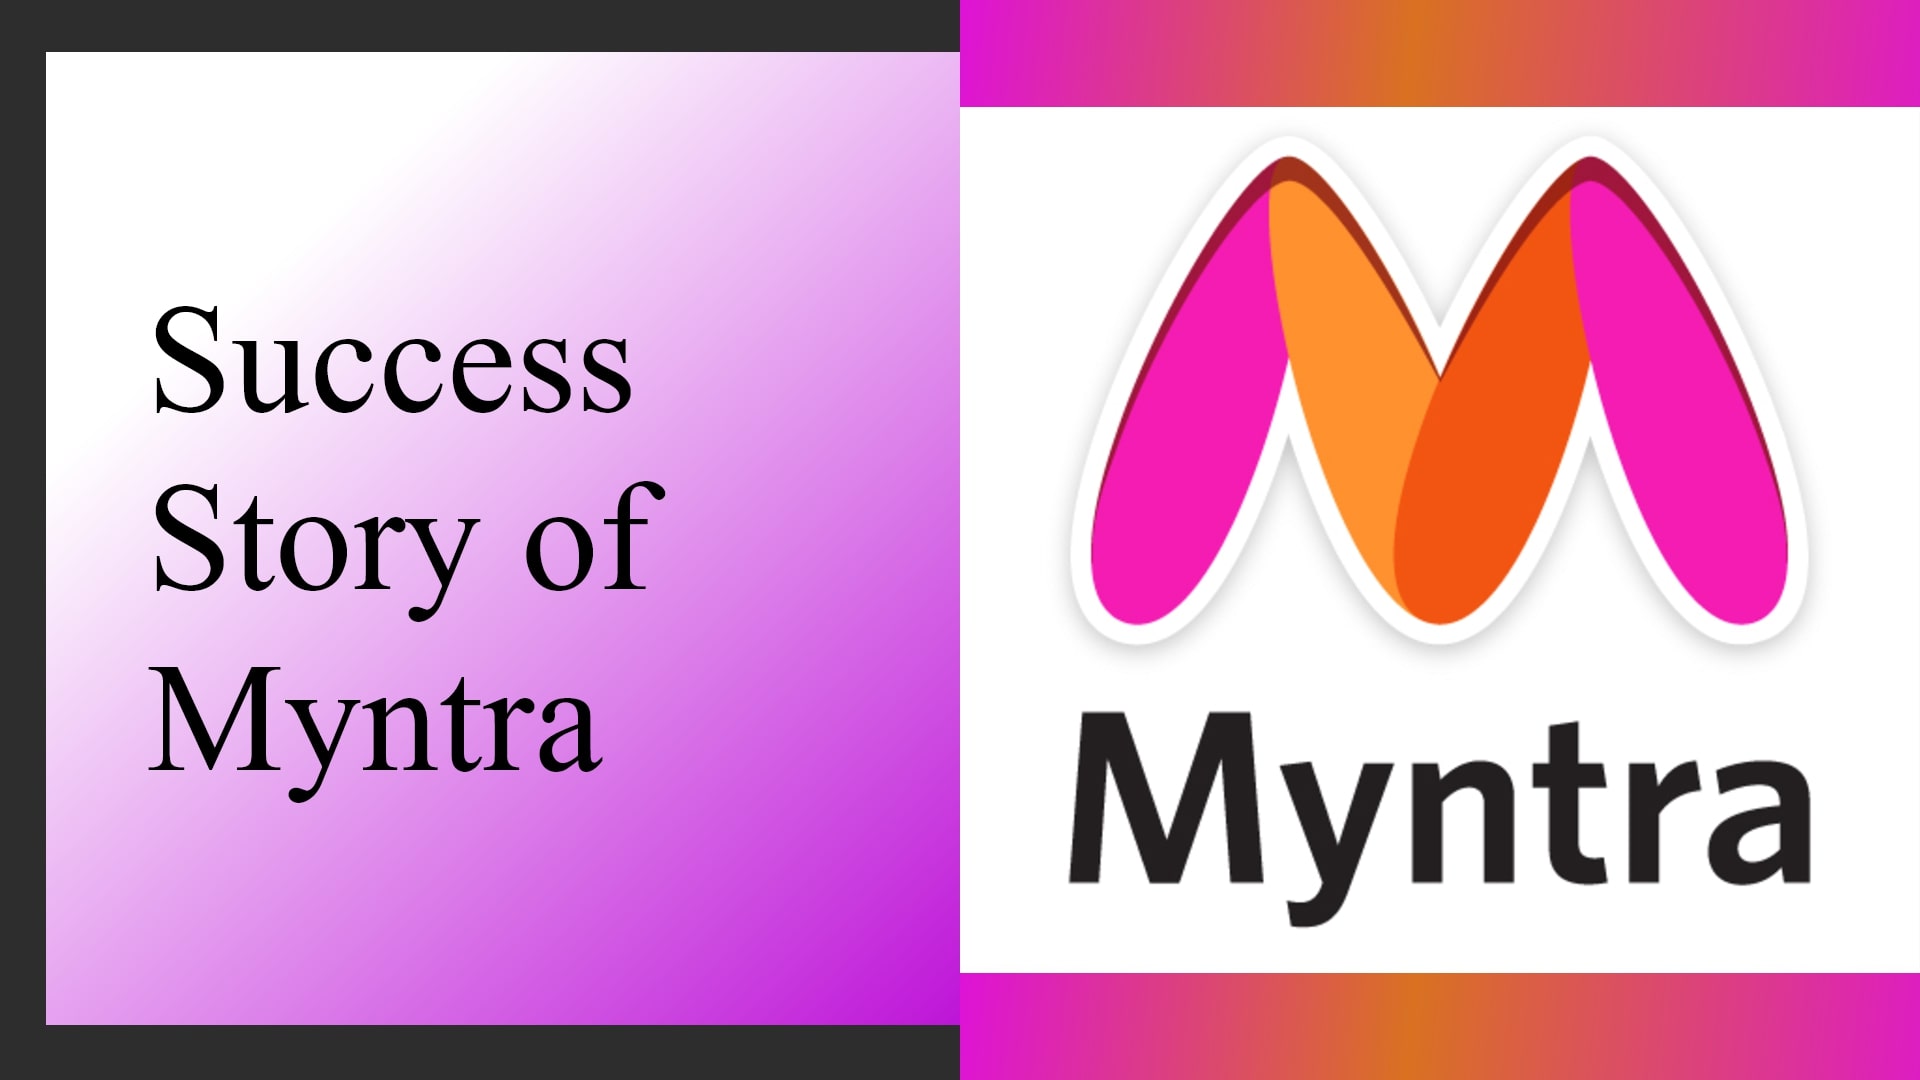 Myntra Success Story